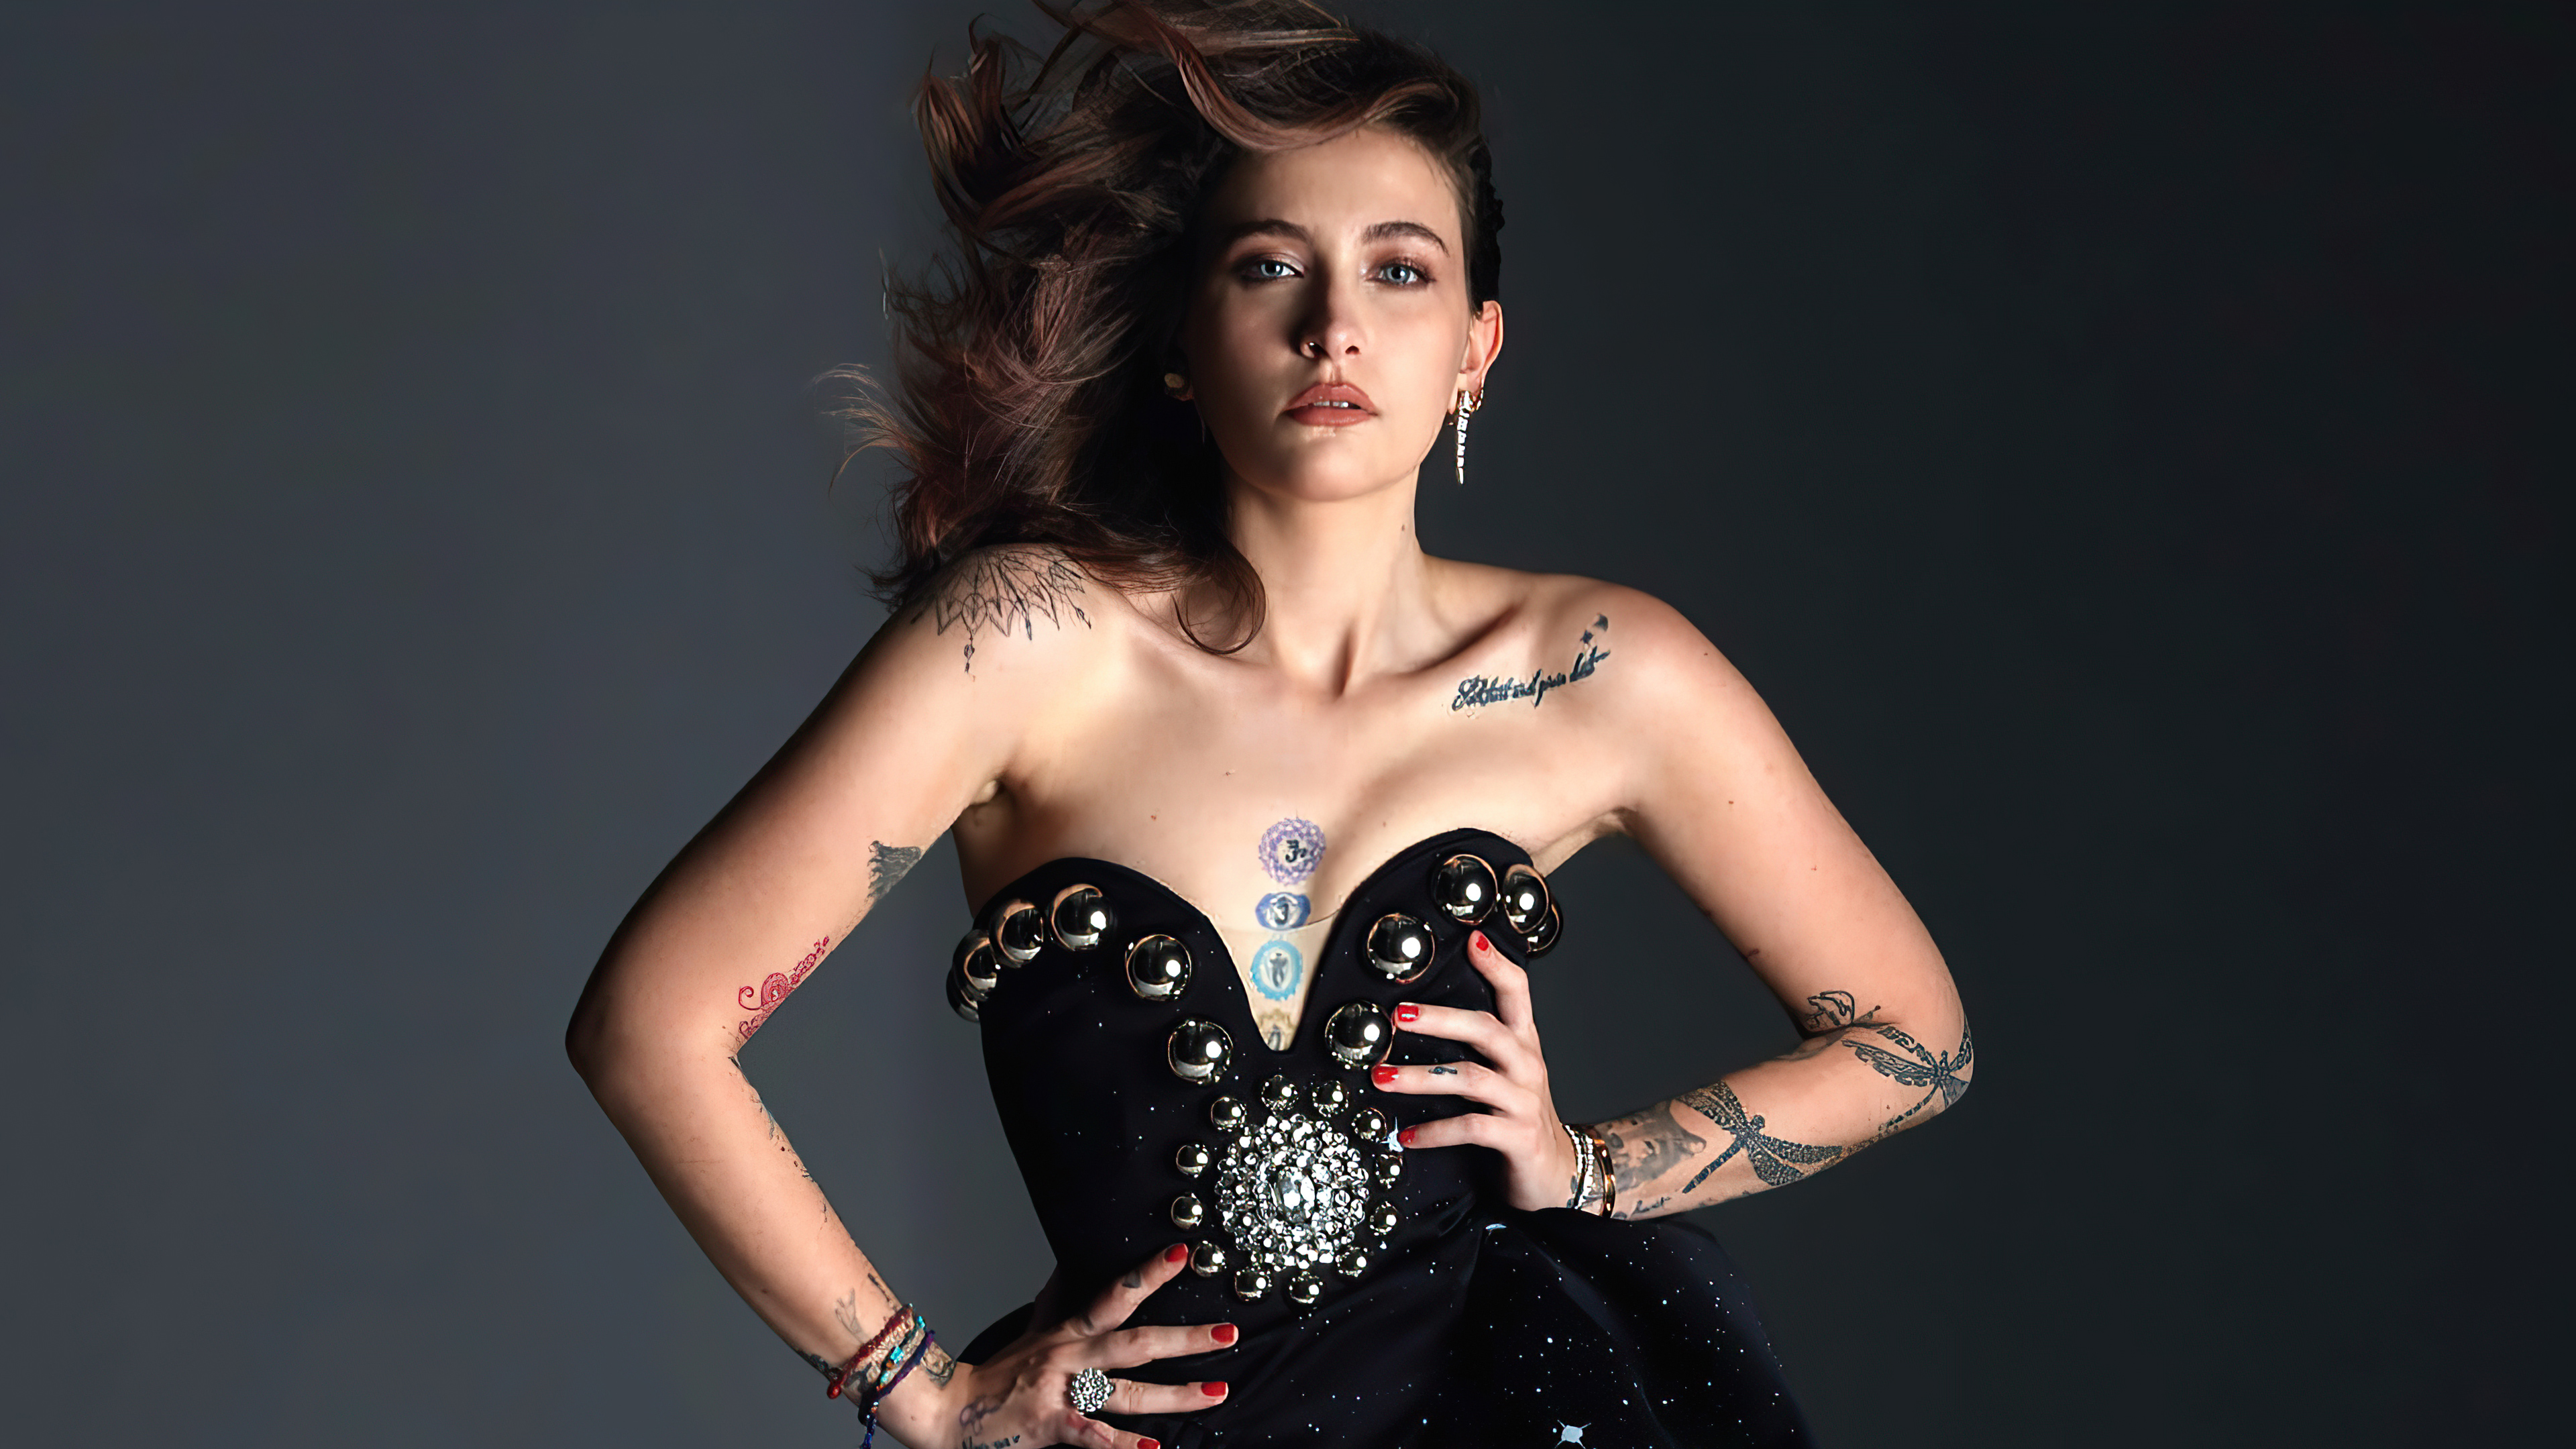 Free photo Paris Jackson in a black dress with body tattoos